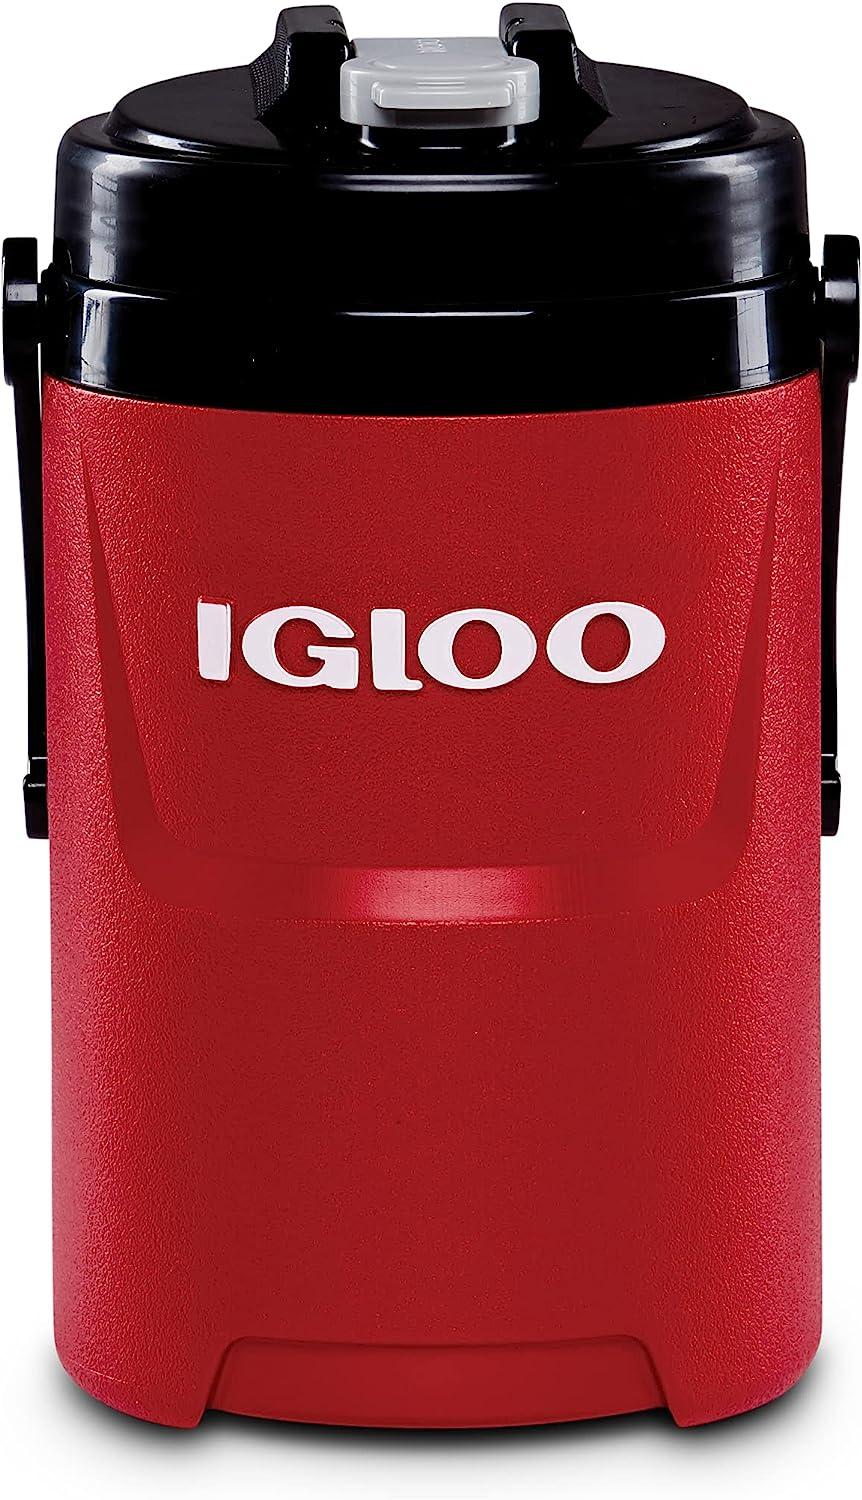 Custom Printed Igloo Coolers and Jugs